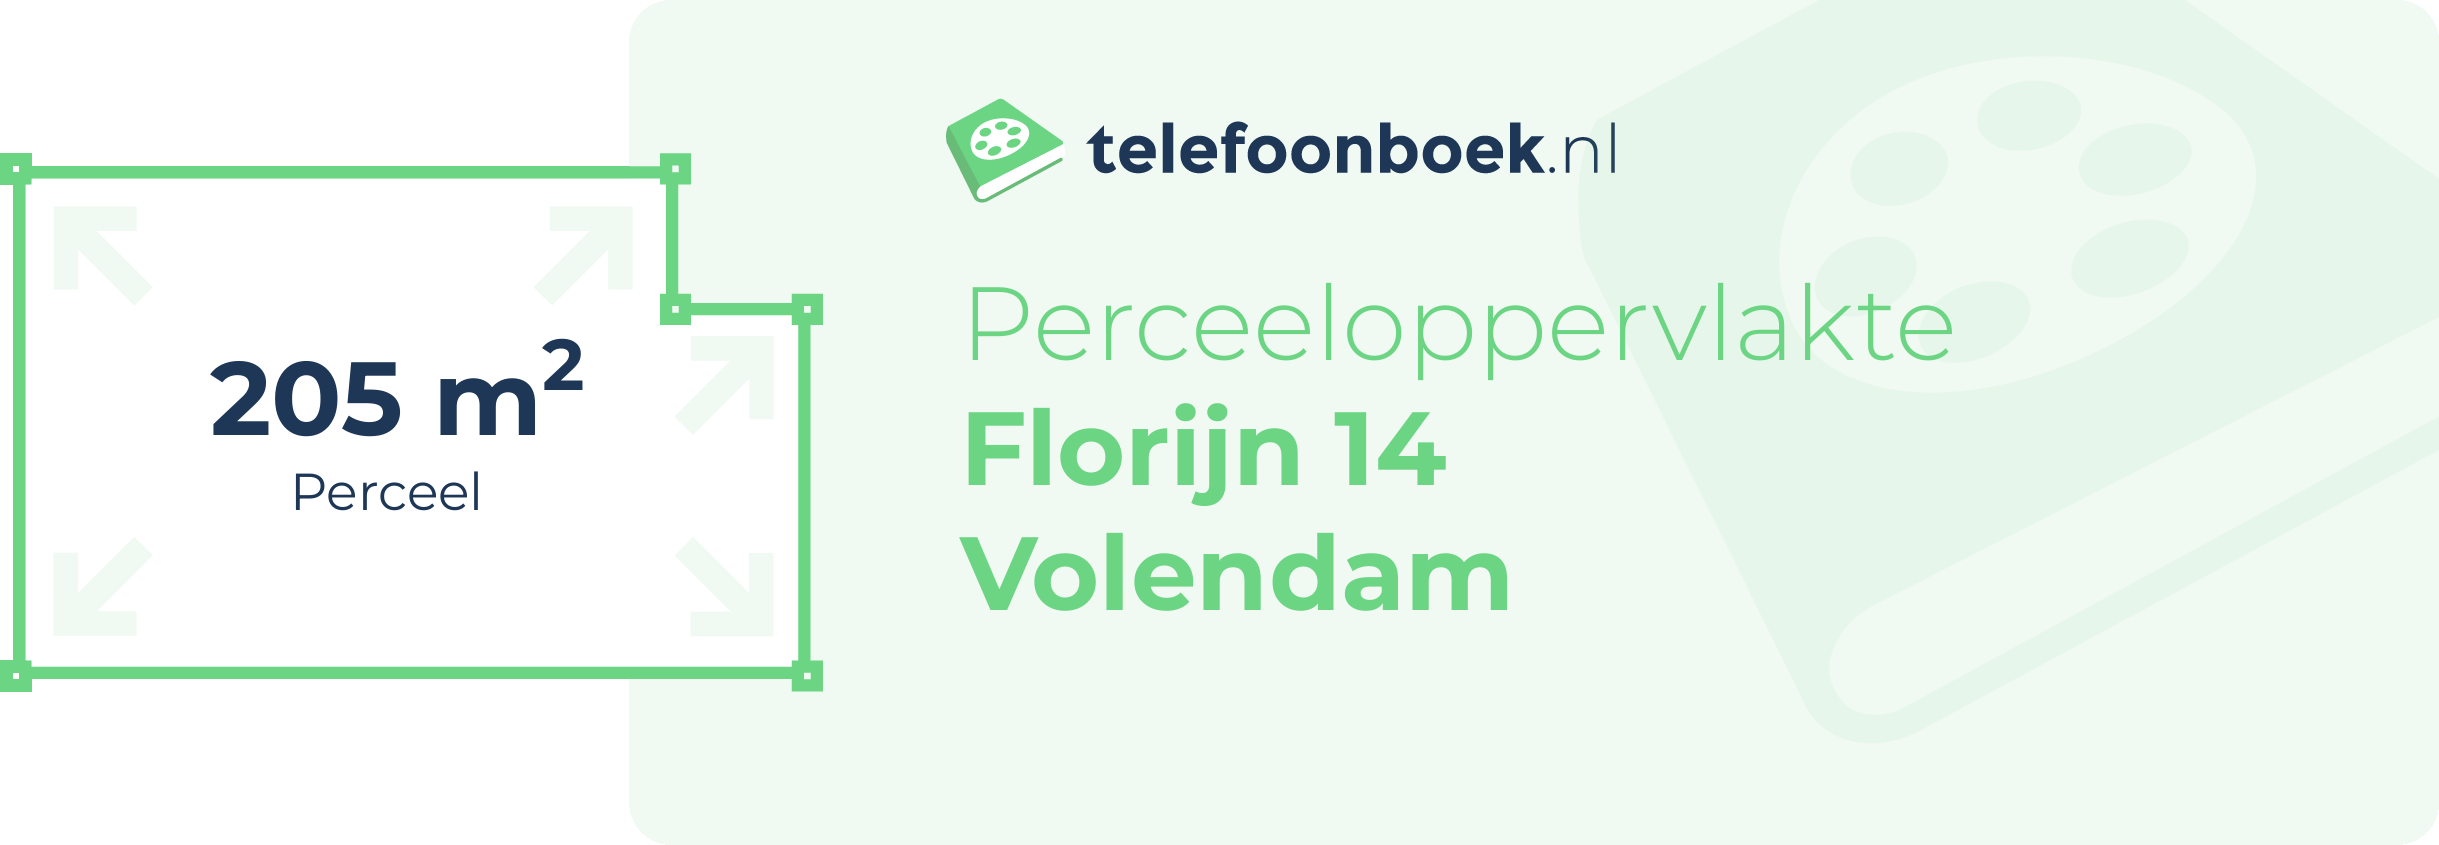 Perceeloppervlakte Florijn 14 Volendam